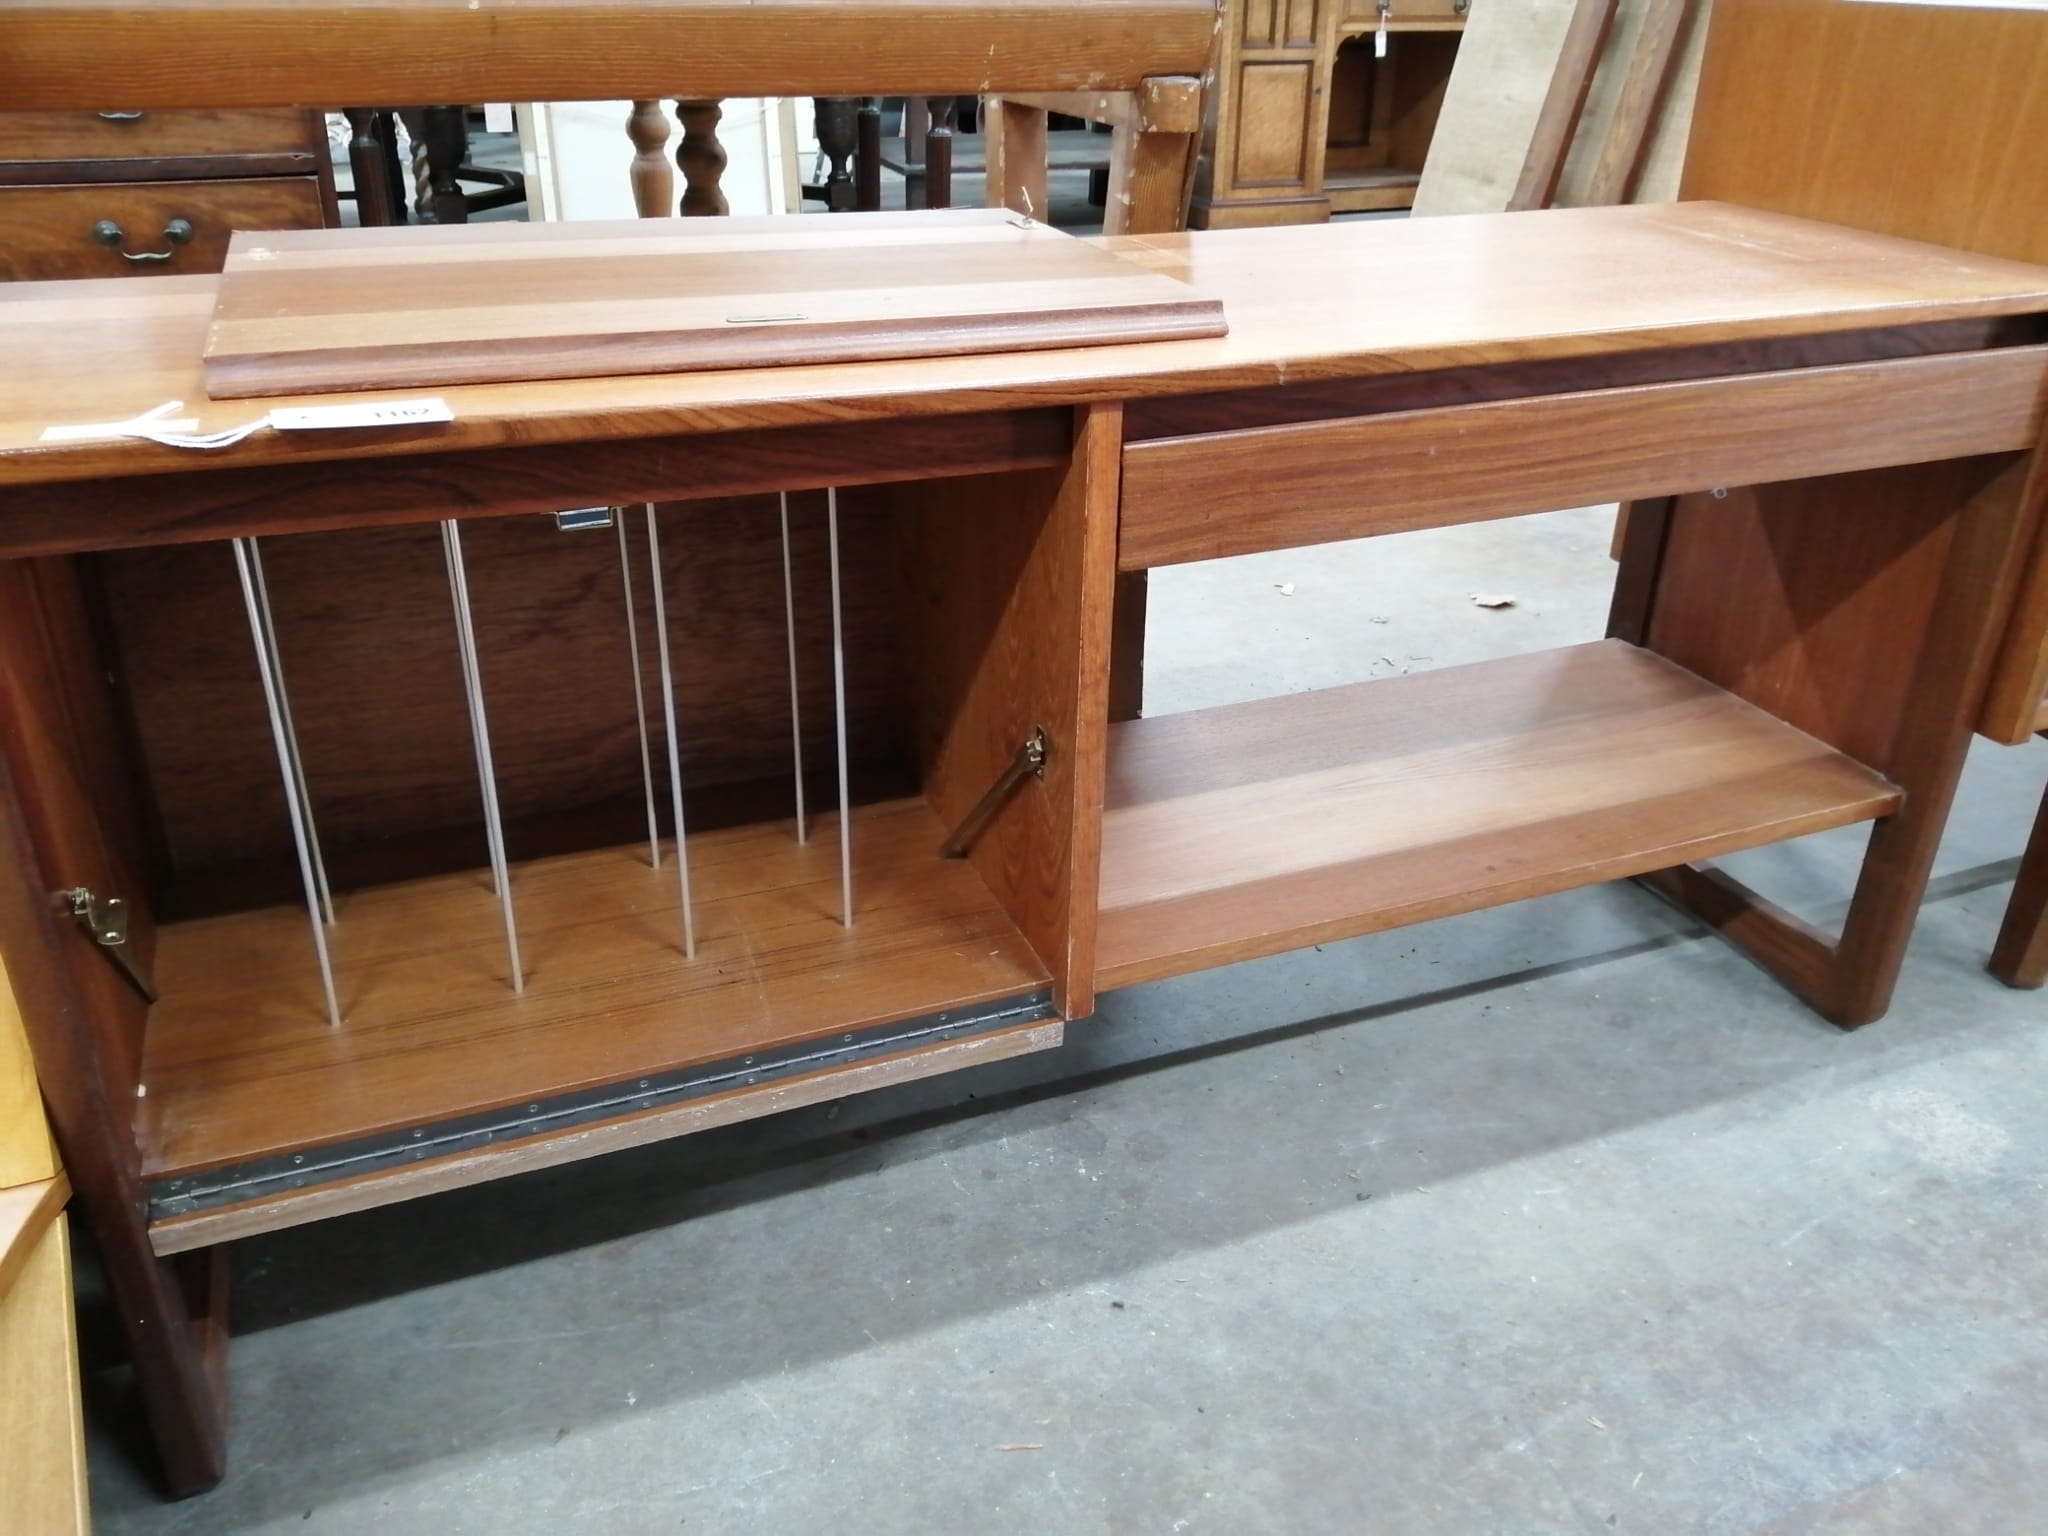 A mid century teak stereo cabinet, width 127cm, depth 37cm, height 61cm